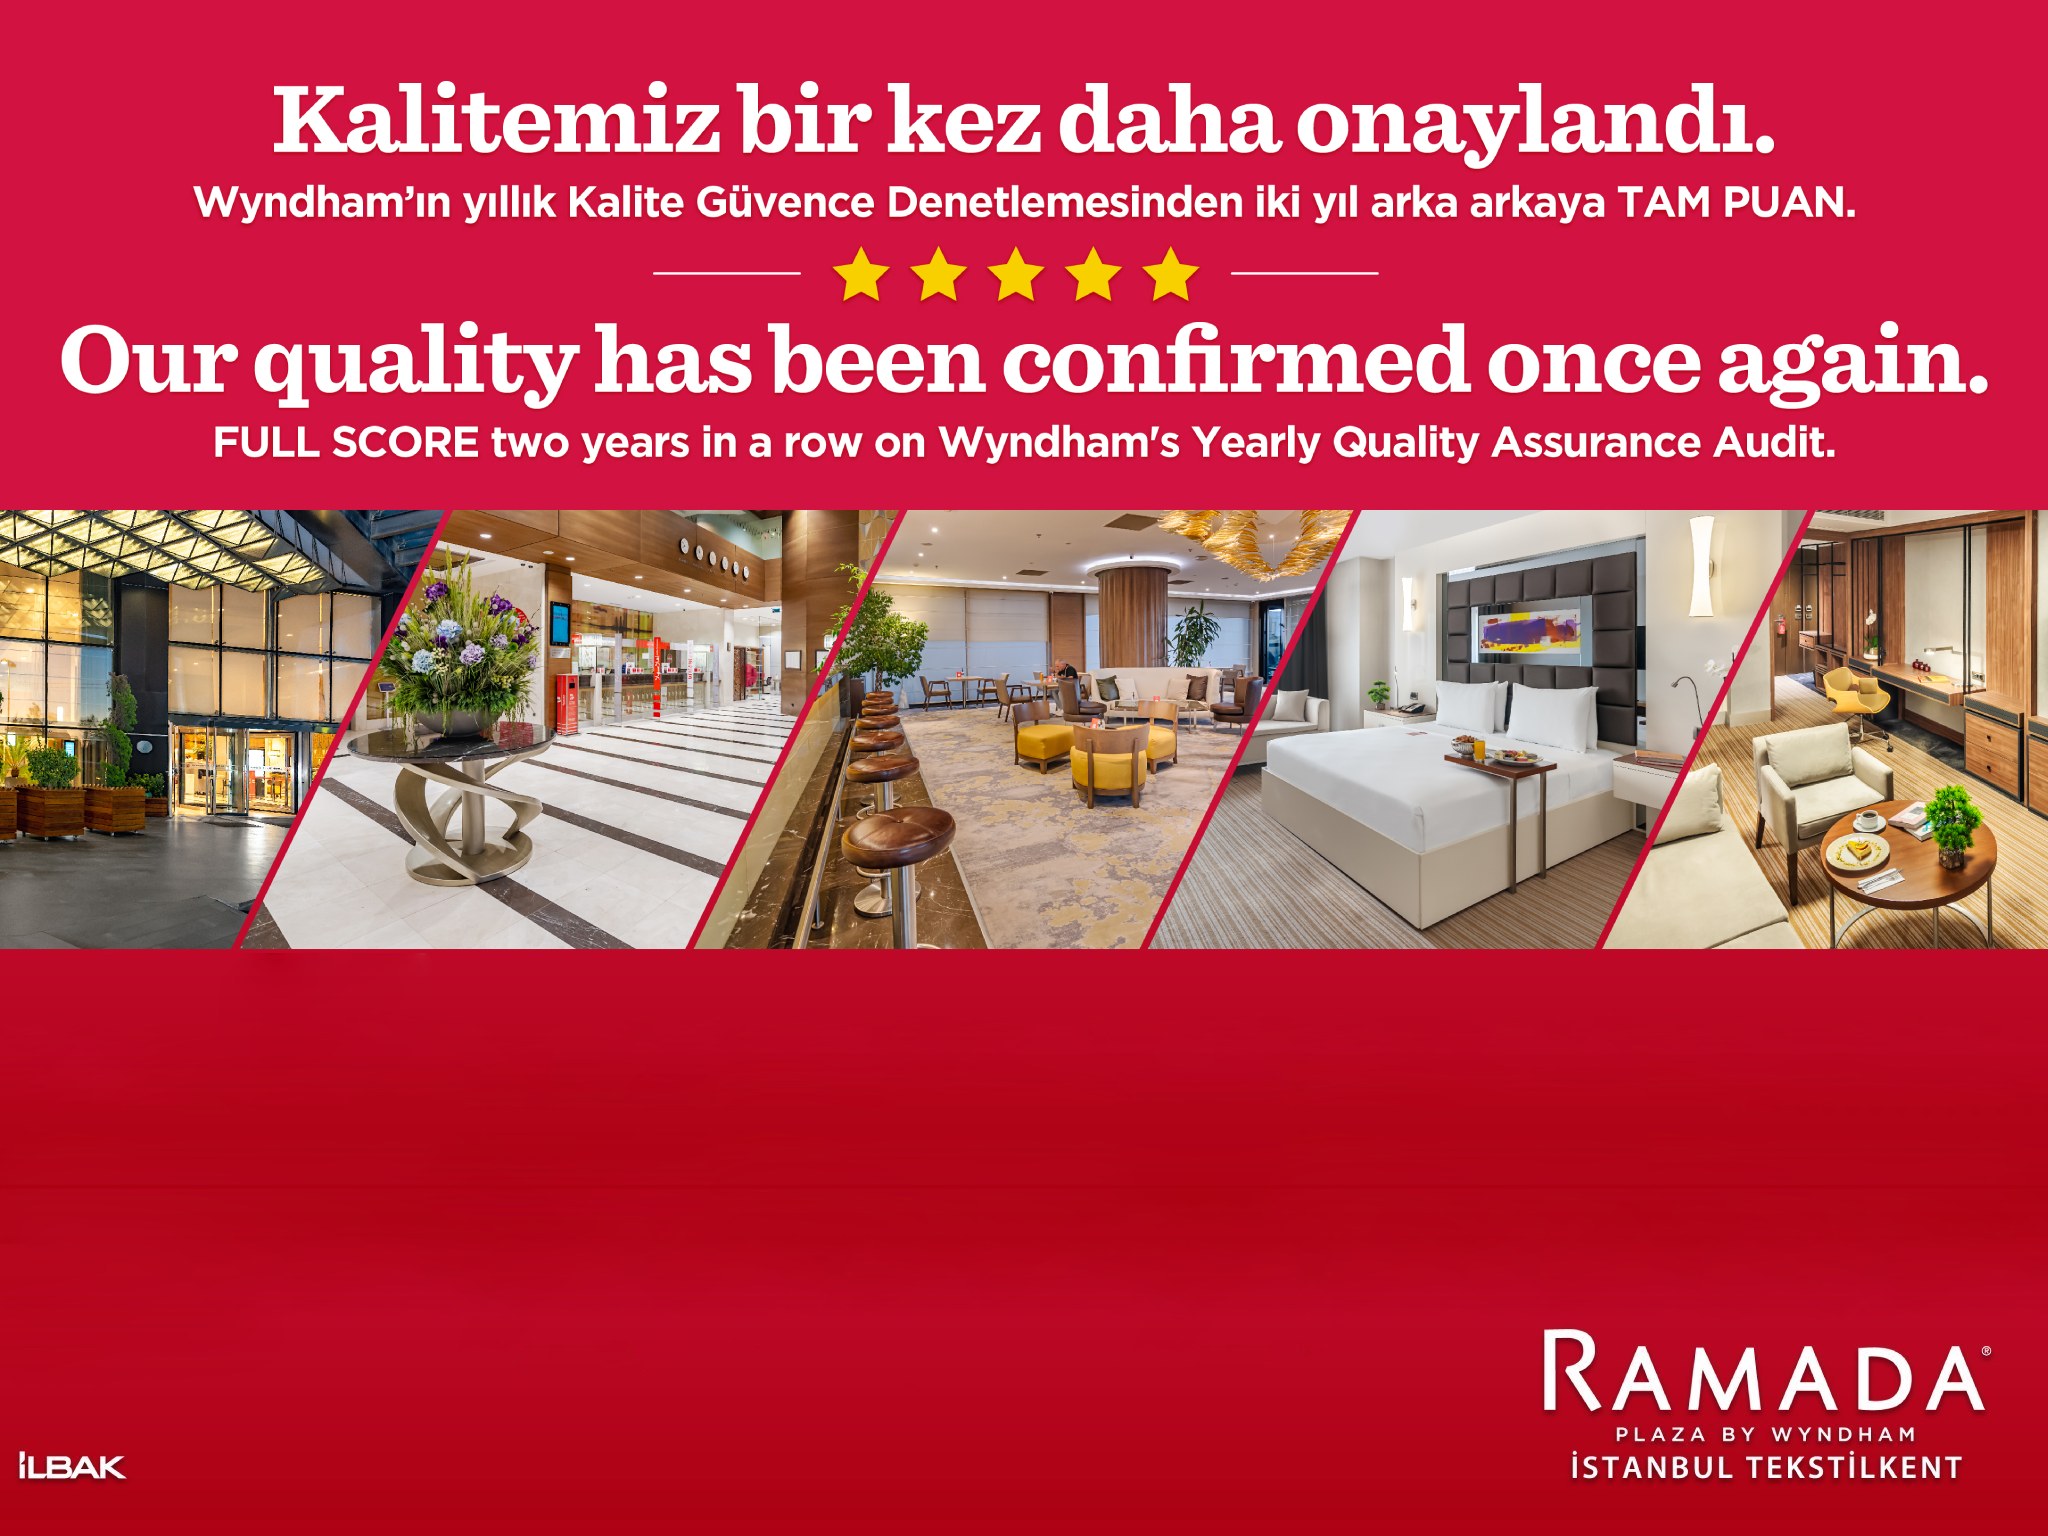 Ramada Plaza By Wyndham Istanbul Tekstilkent Achieves Full Marks from Wyndham!